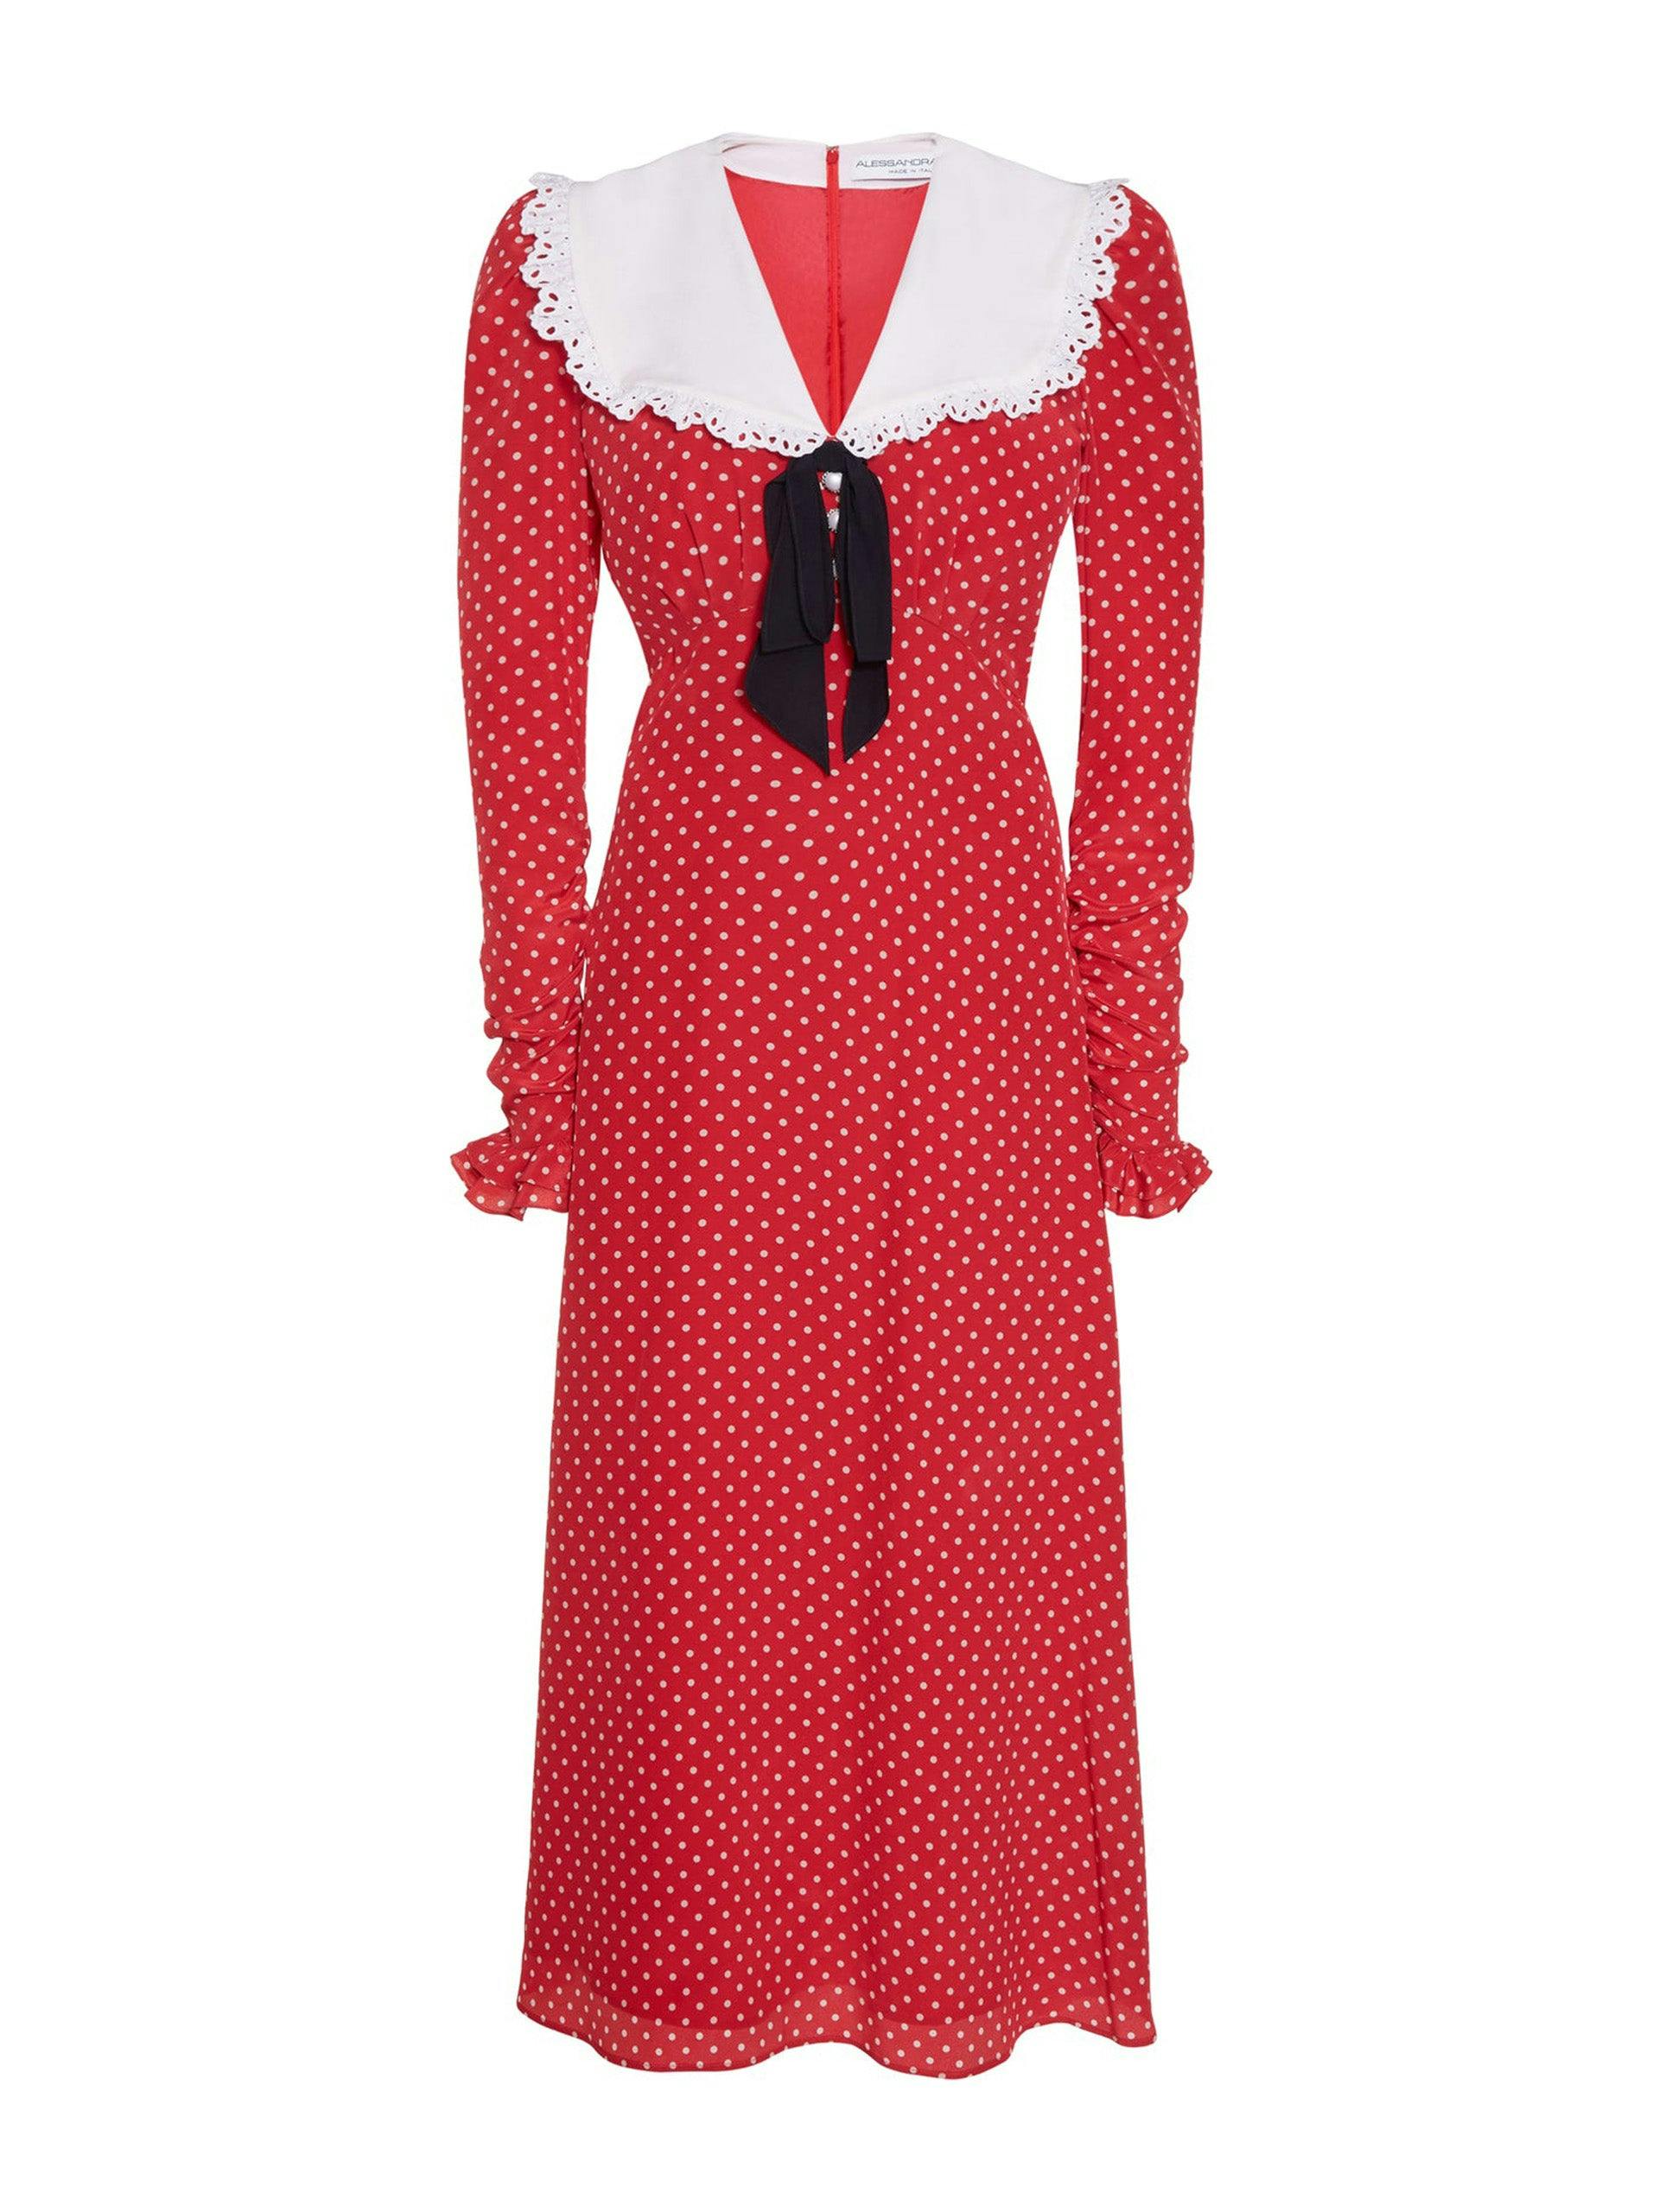 Oversized collar red polkadot dress